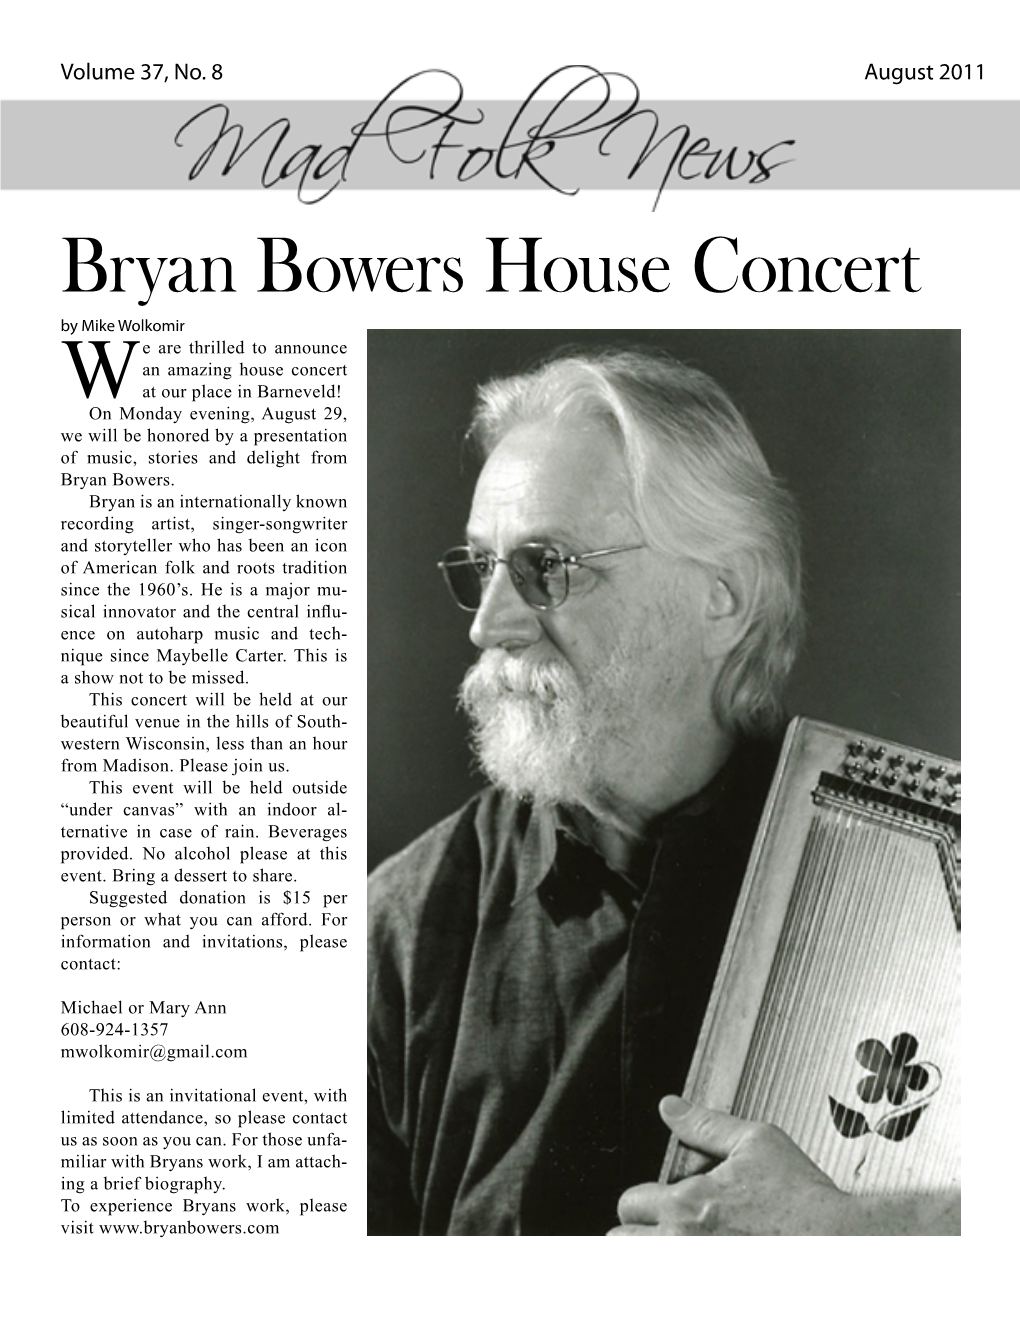 Bryan Bowers House Concert